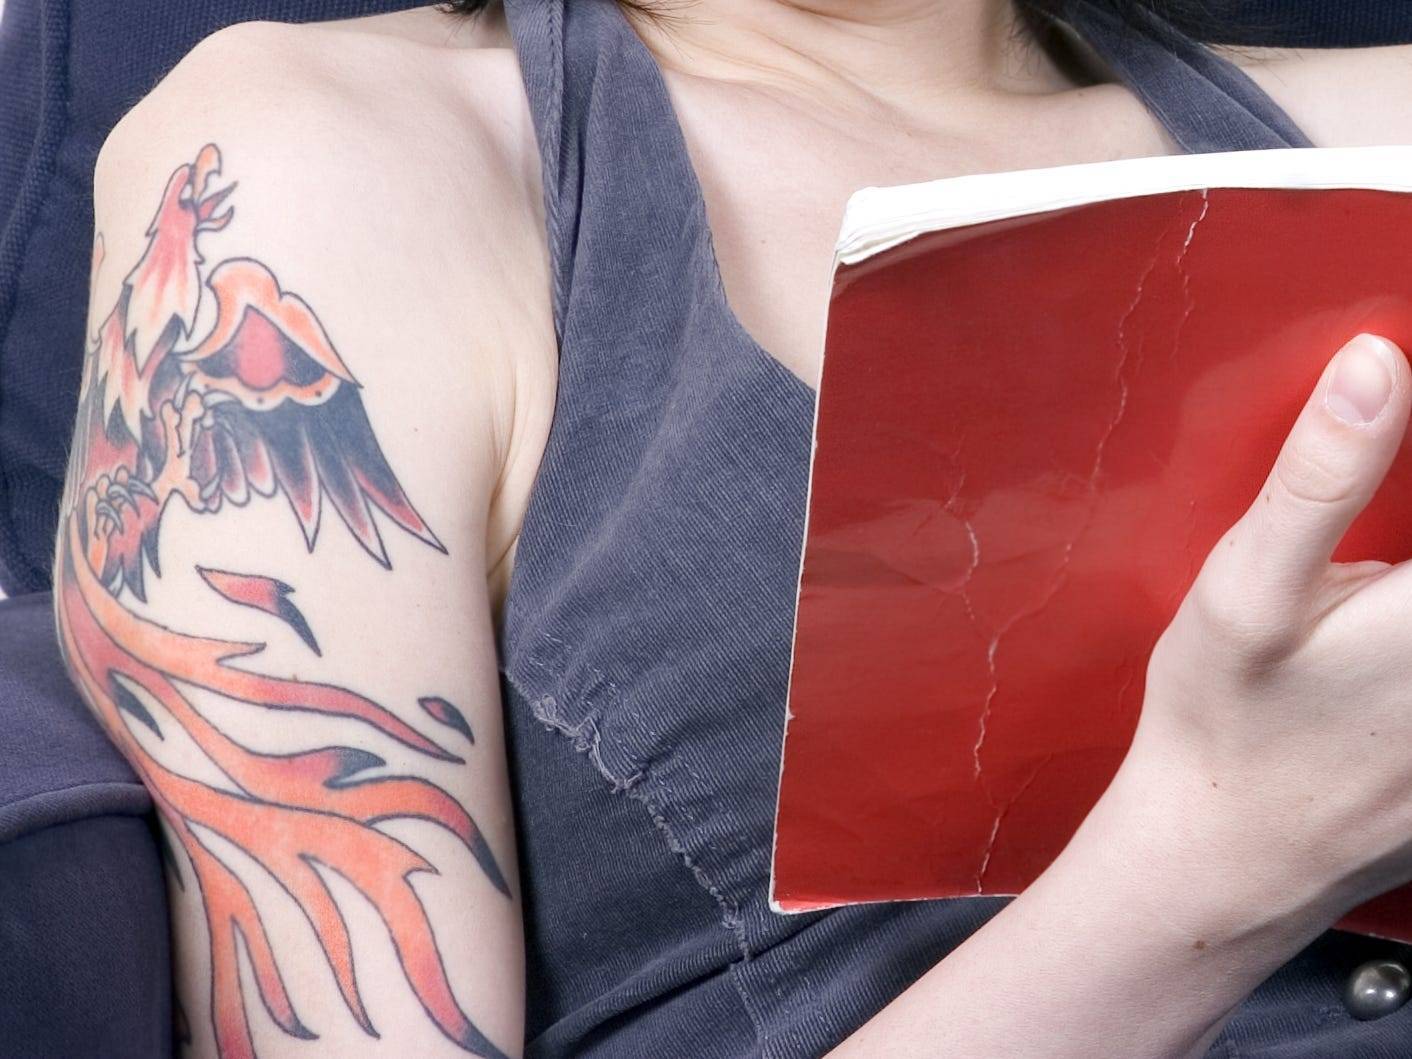 30 Gorgeous Phoenix Tattoo Designs